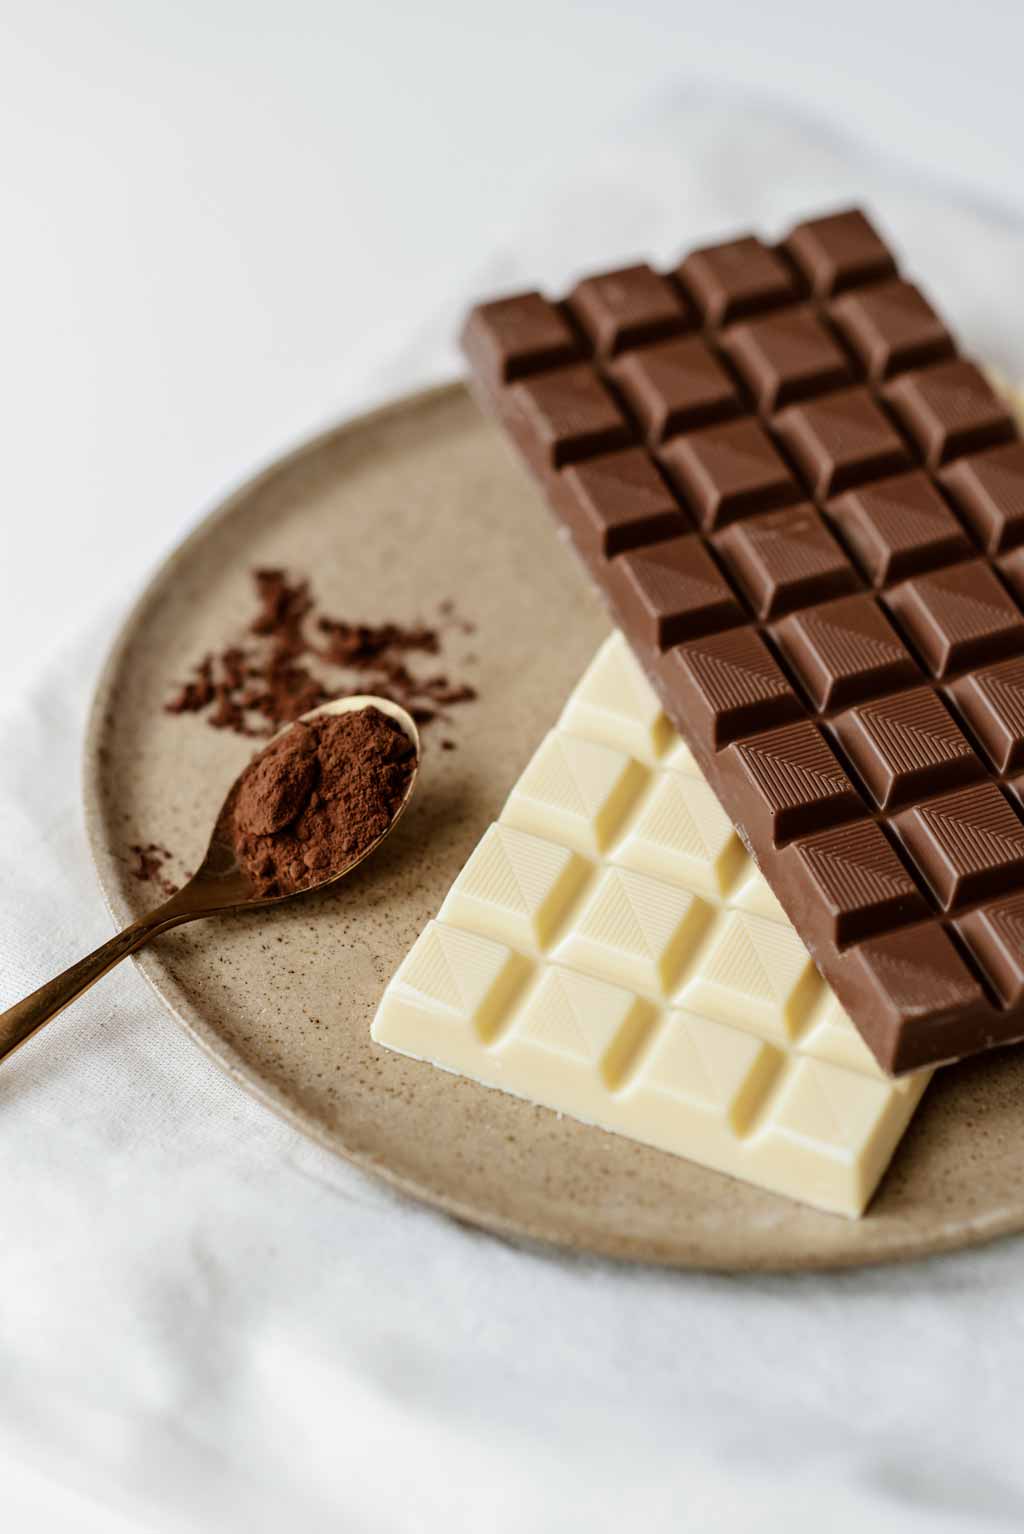 Is chocolate vegan? A dark chocolate bar on top of a white chocolate bar